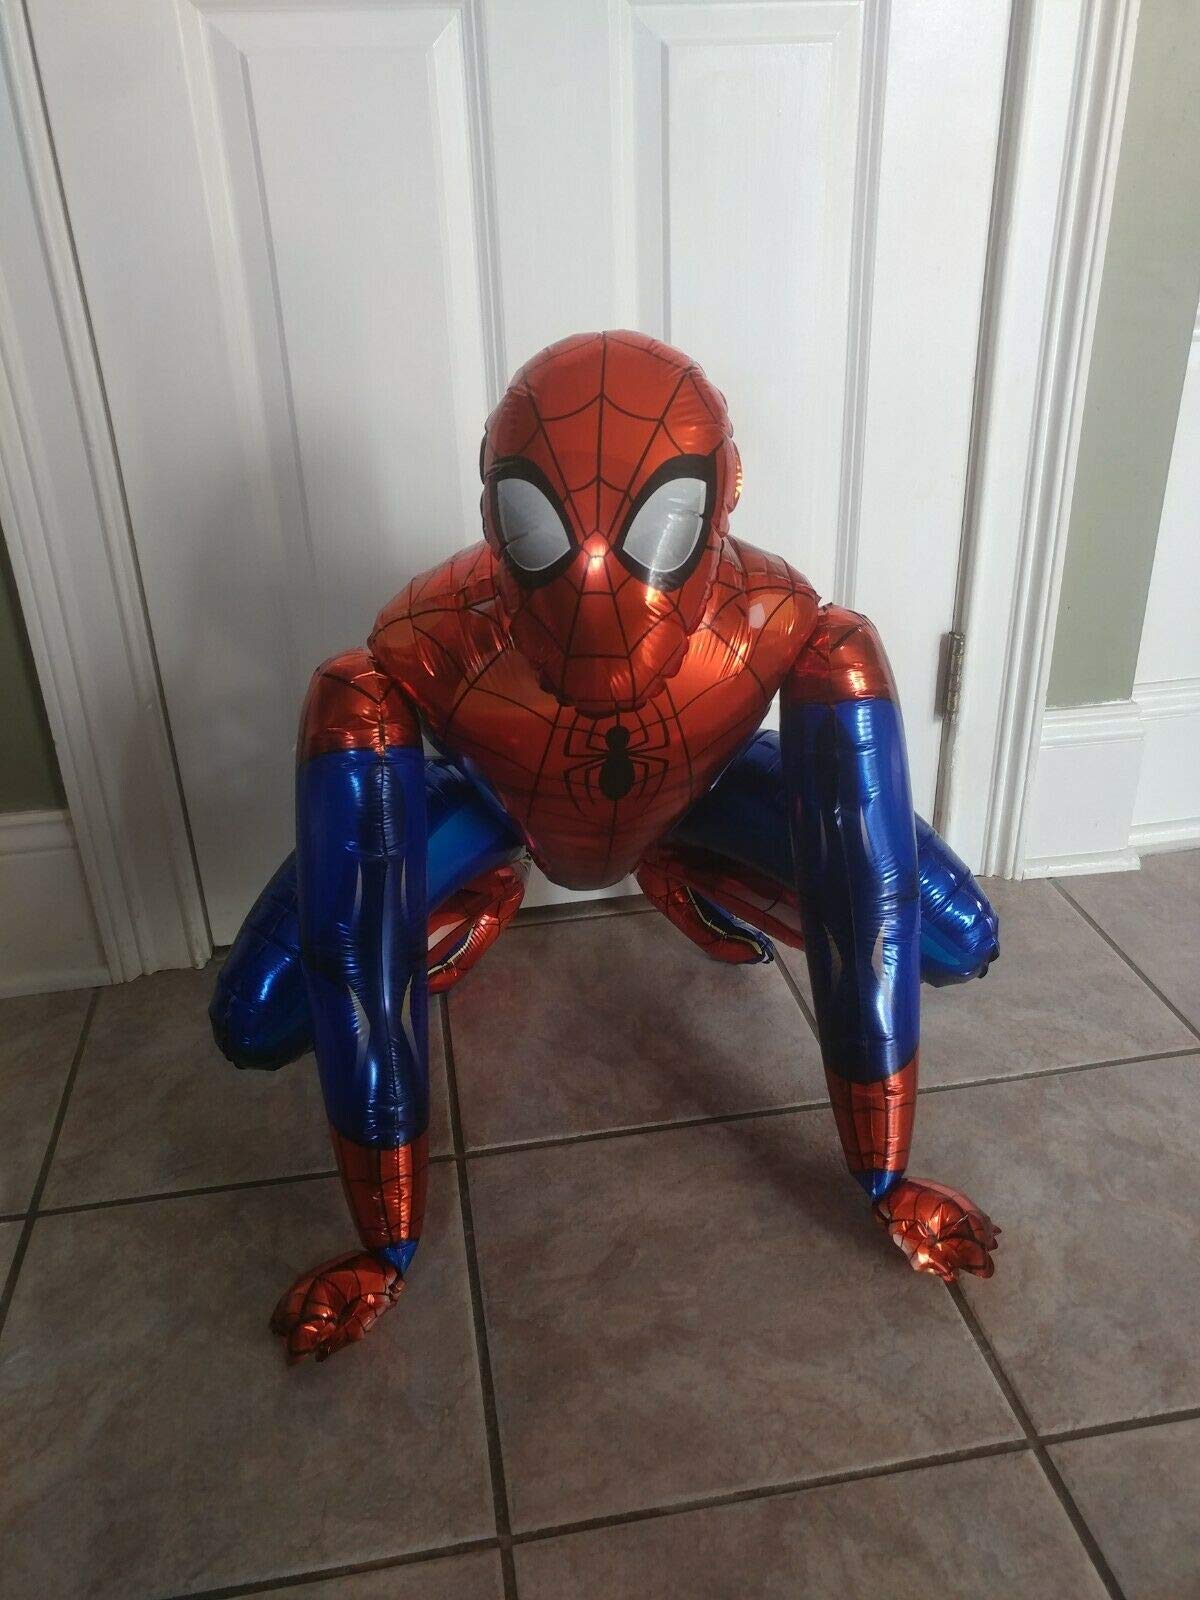 BCD-PRO Superhero Spiderman Airwalker Balloon Medium Size for Kid Toddler Birthday Decoration